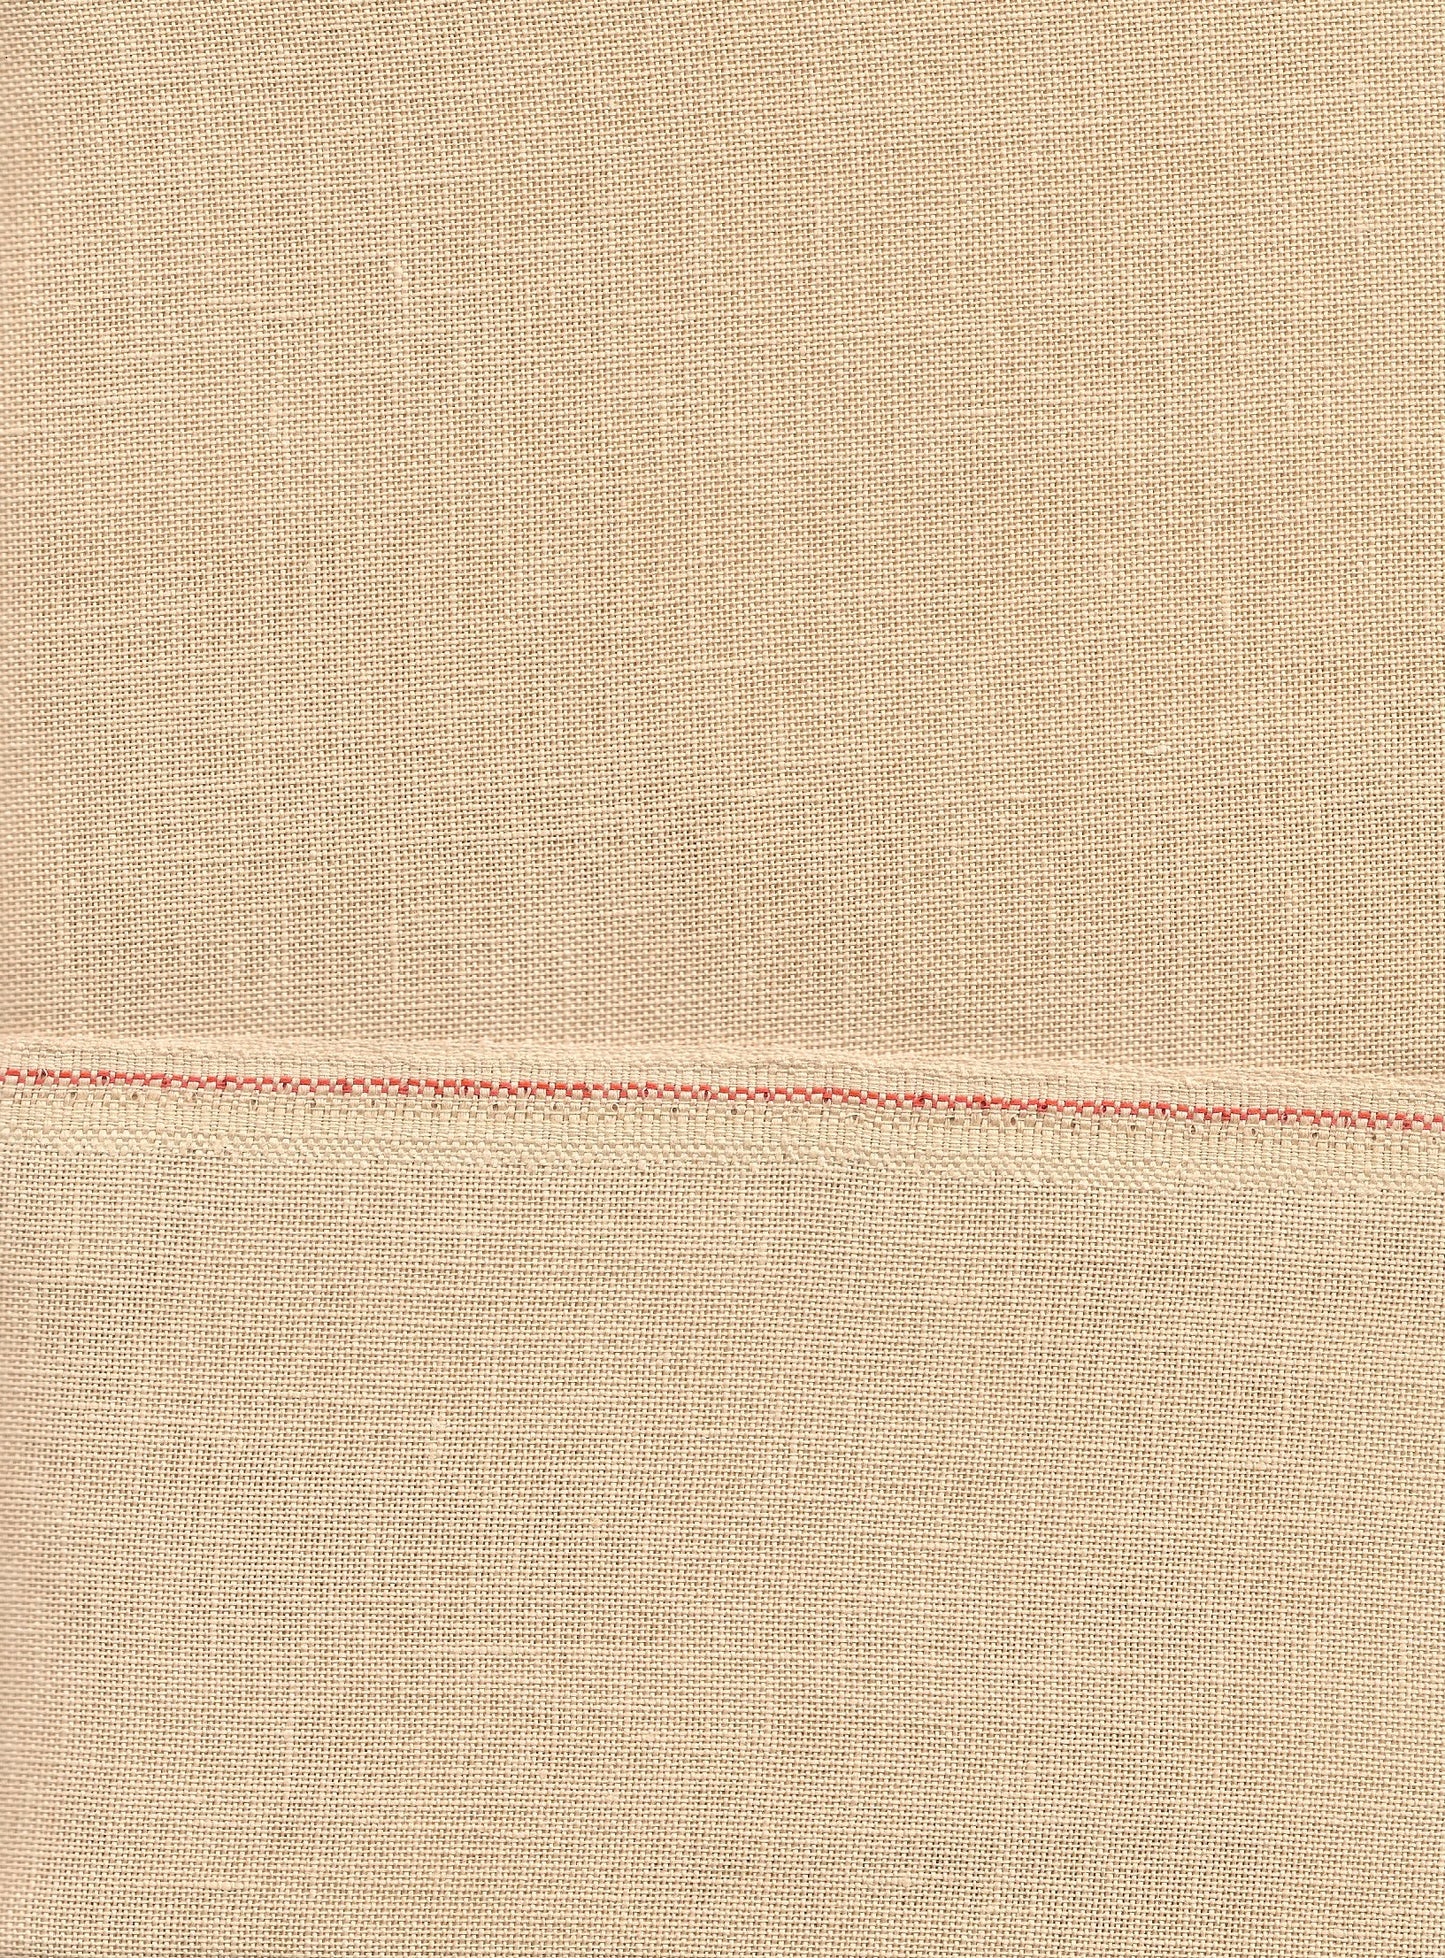 Zweigart Cashel 28ct 18x27 Sand cross stitch fabric